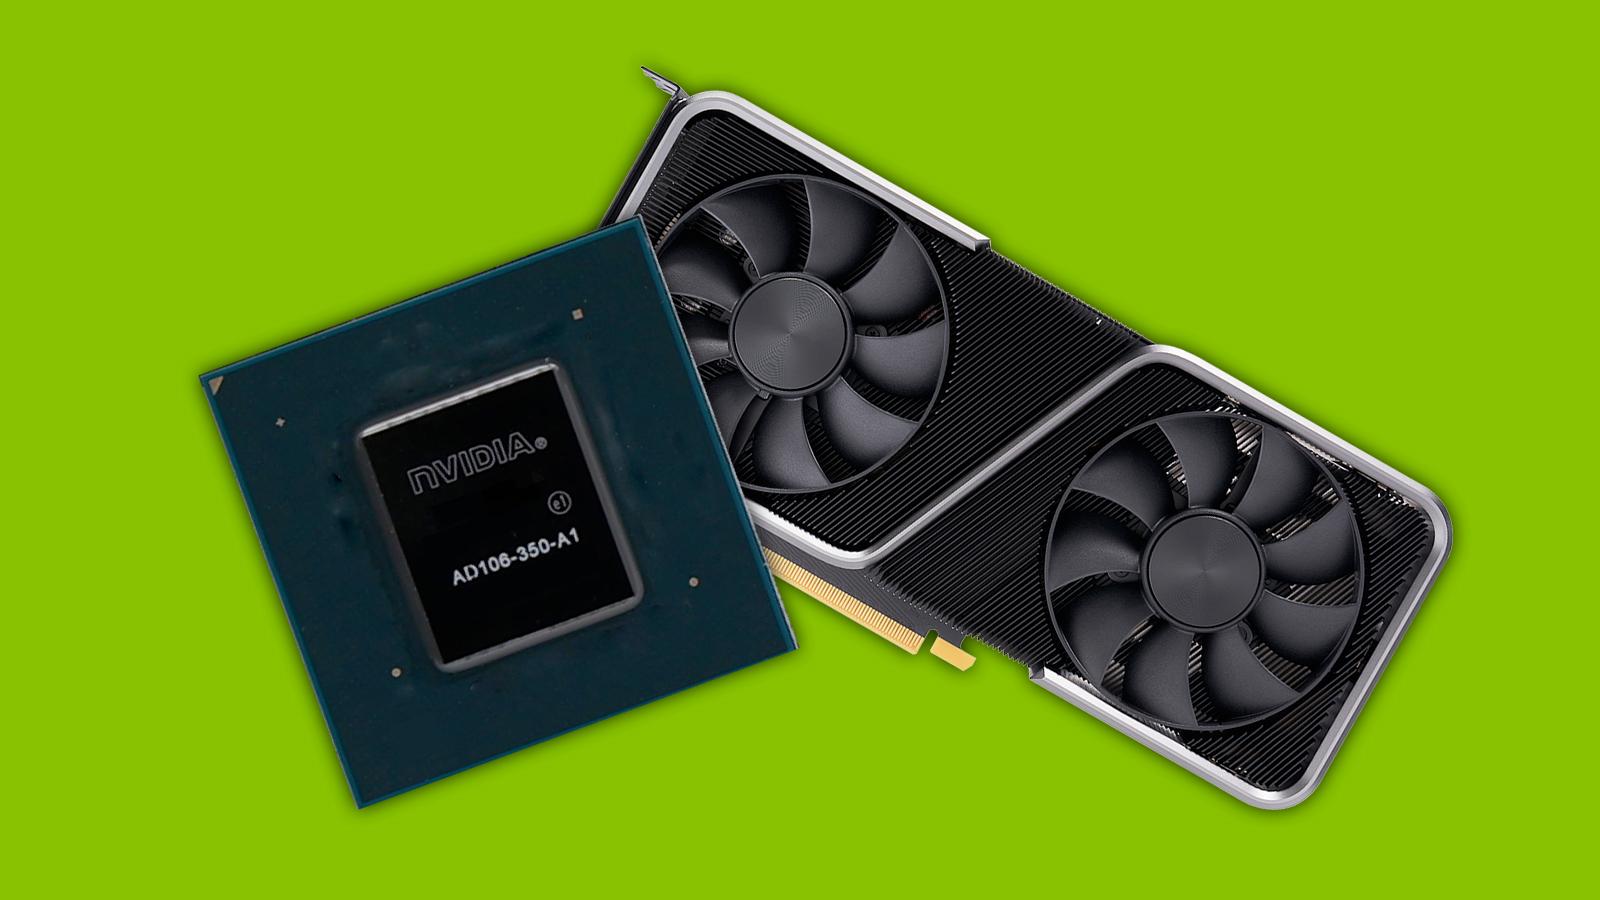 Nvidia Officially Announces GeForce RTX 4060 Ti Desktop GPUs